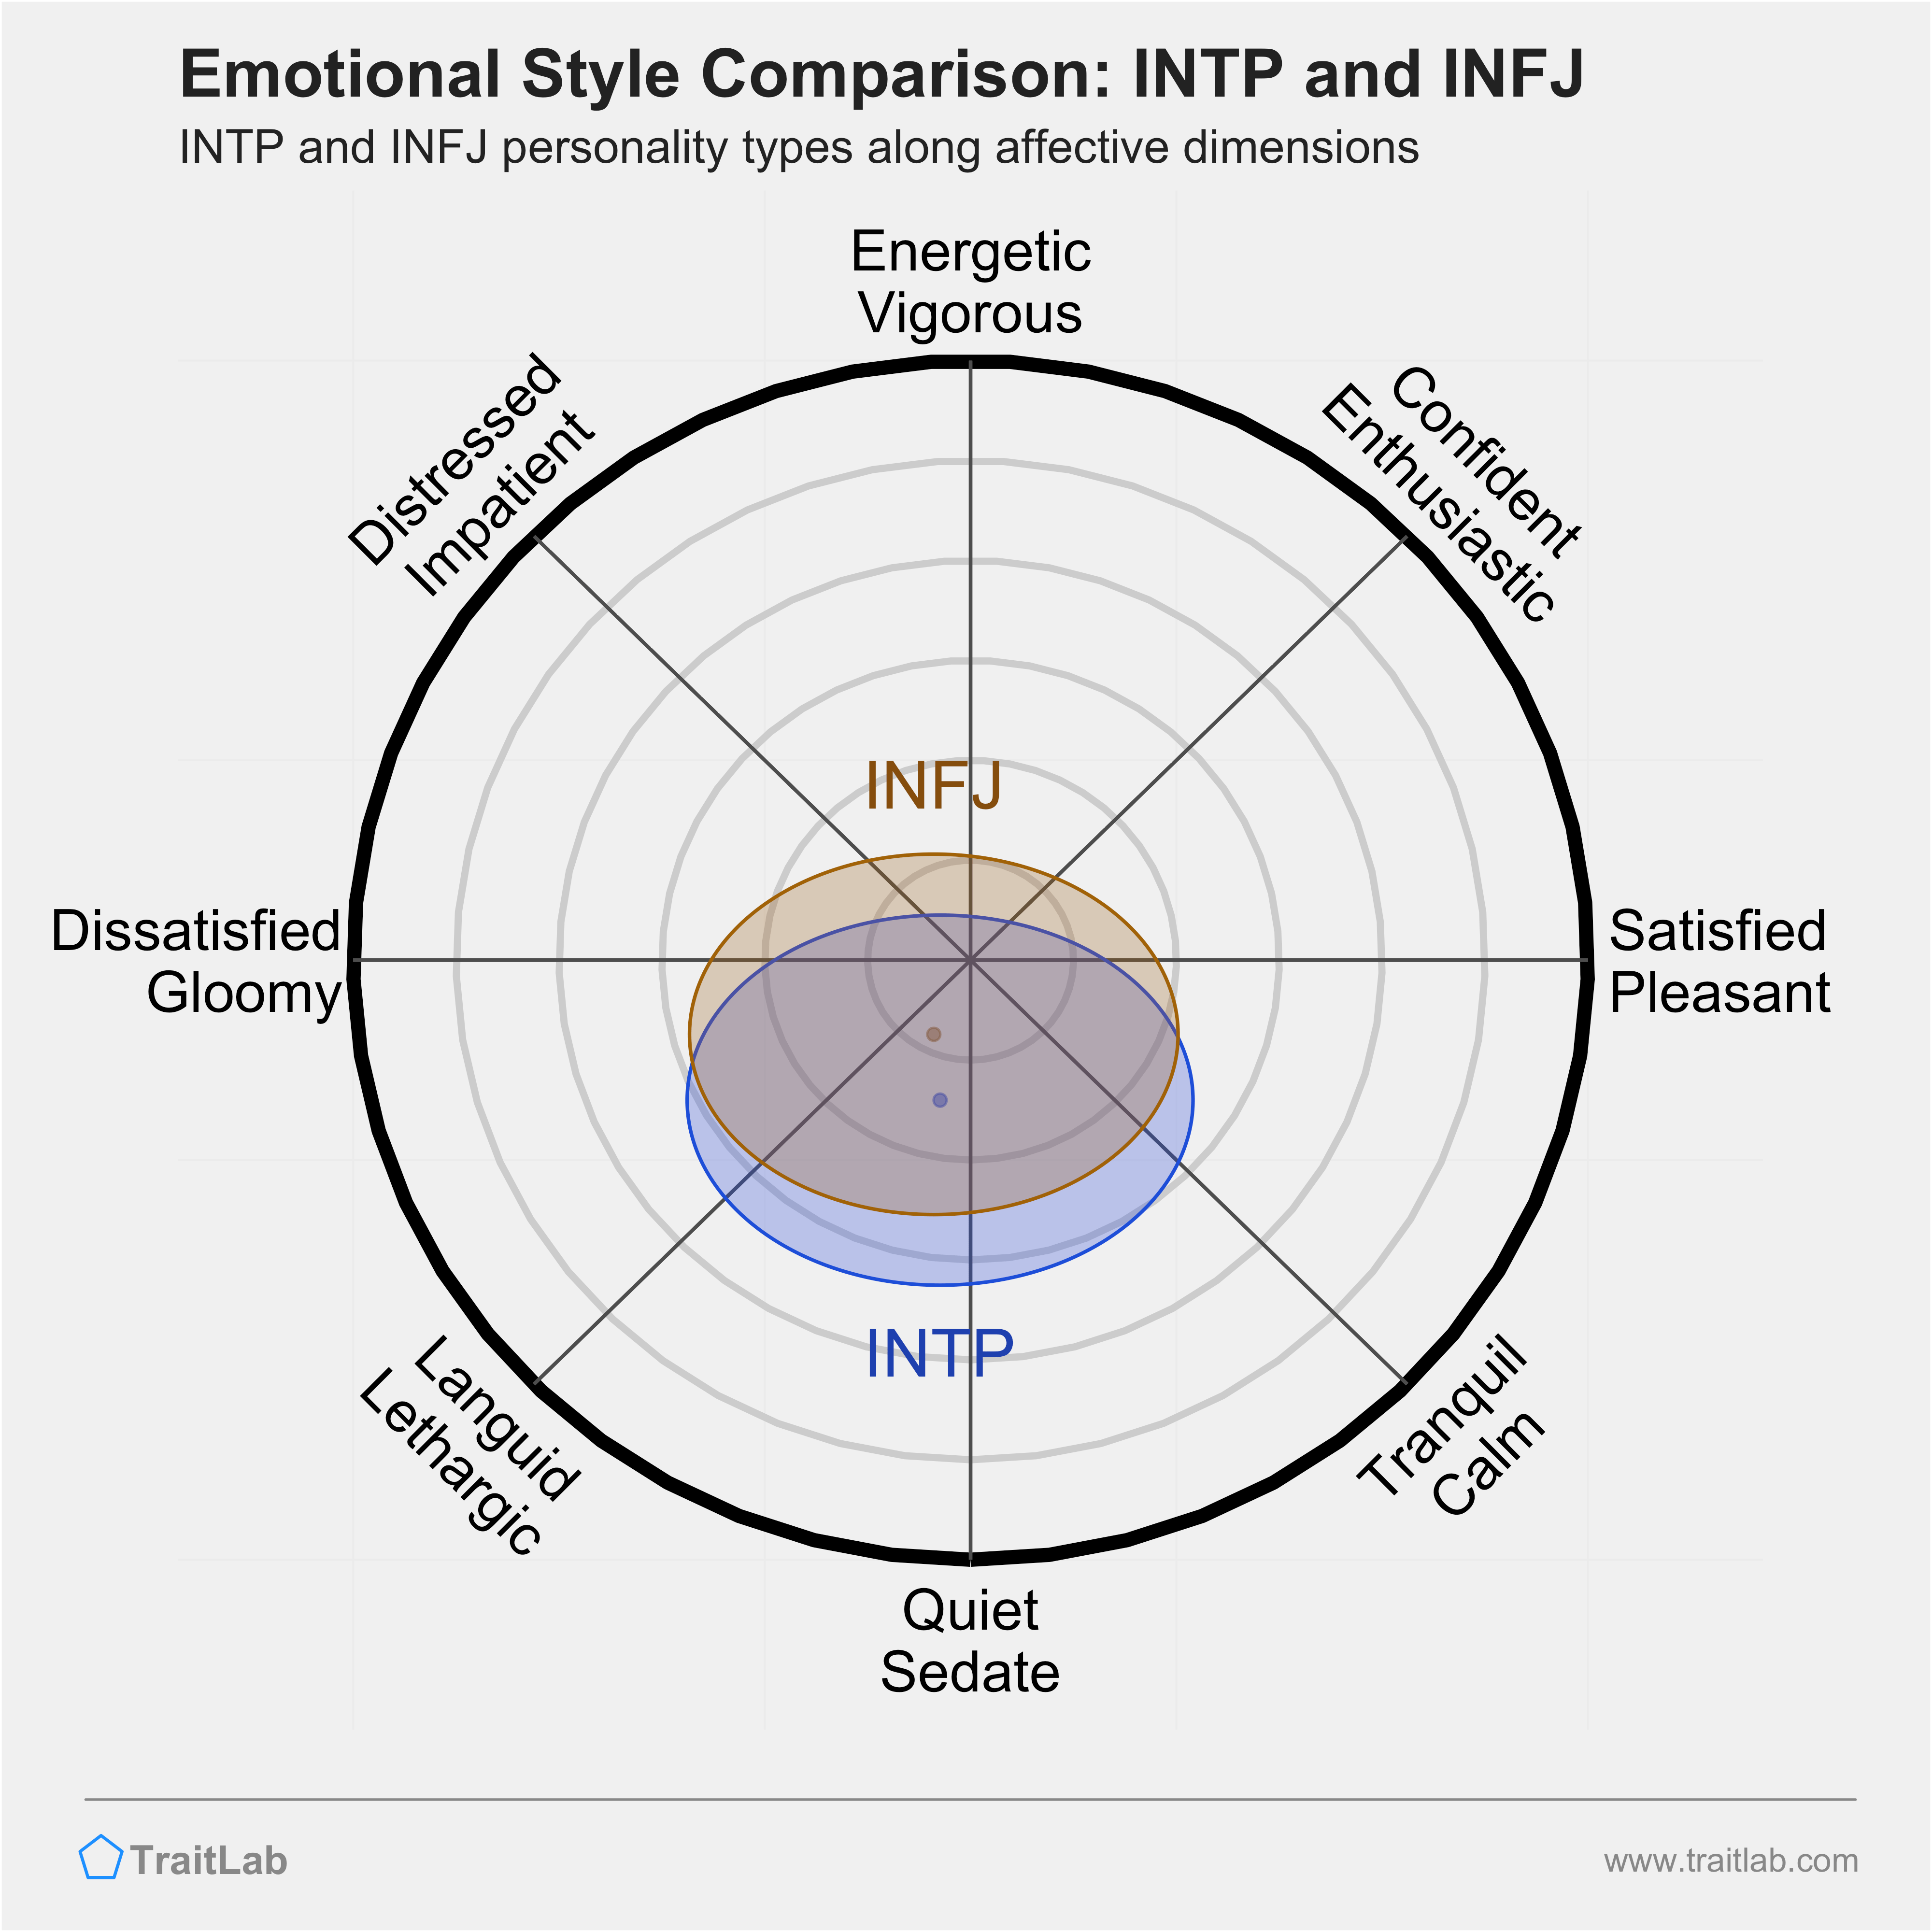 INTP and INFJ comparison across emotional (affective) dimensions